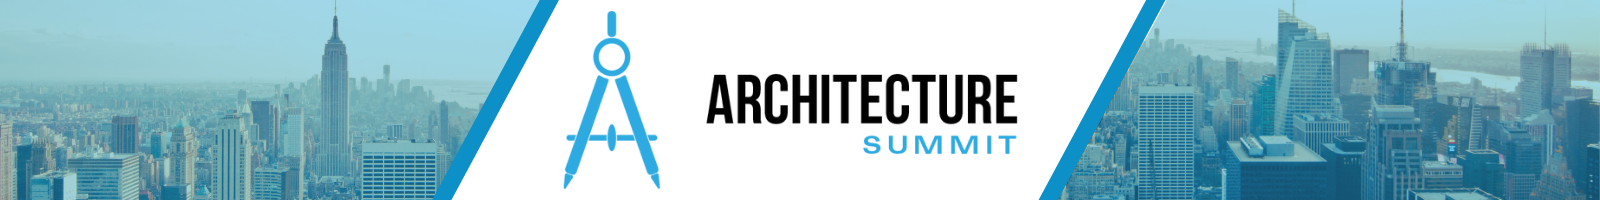 Architecture Summit